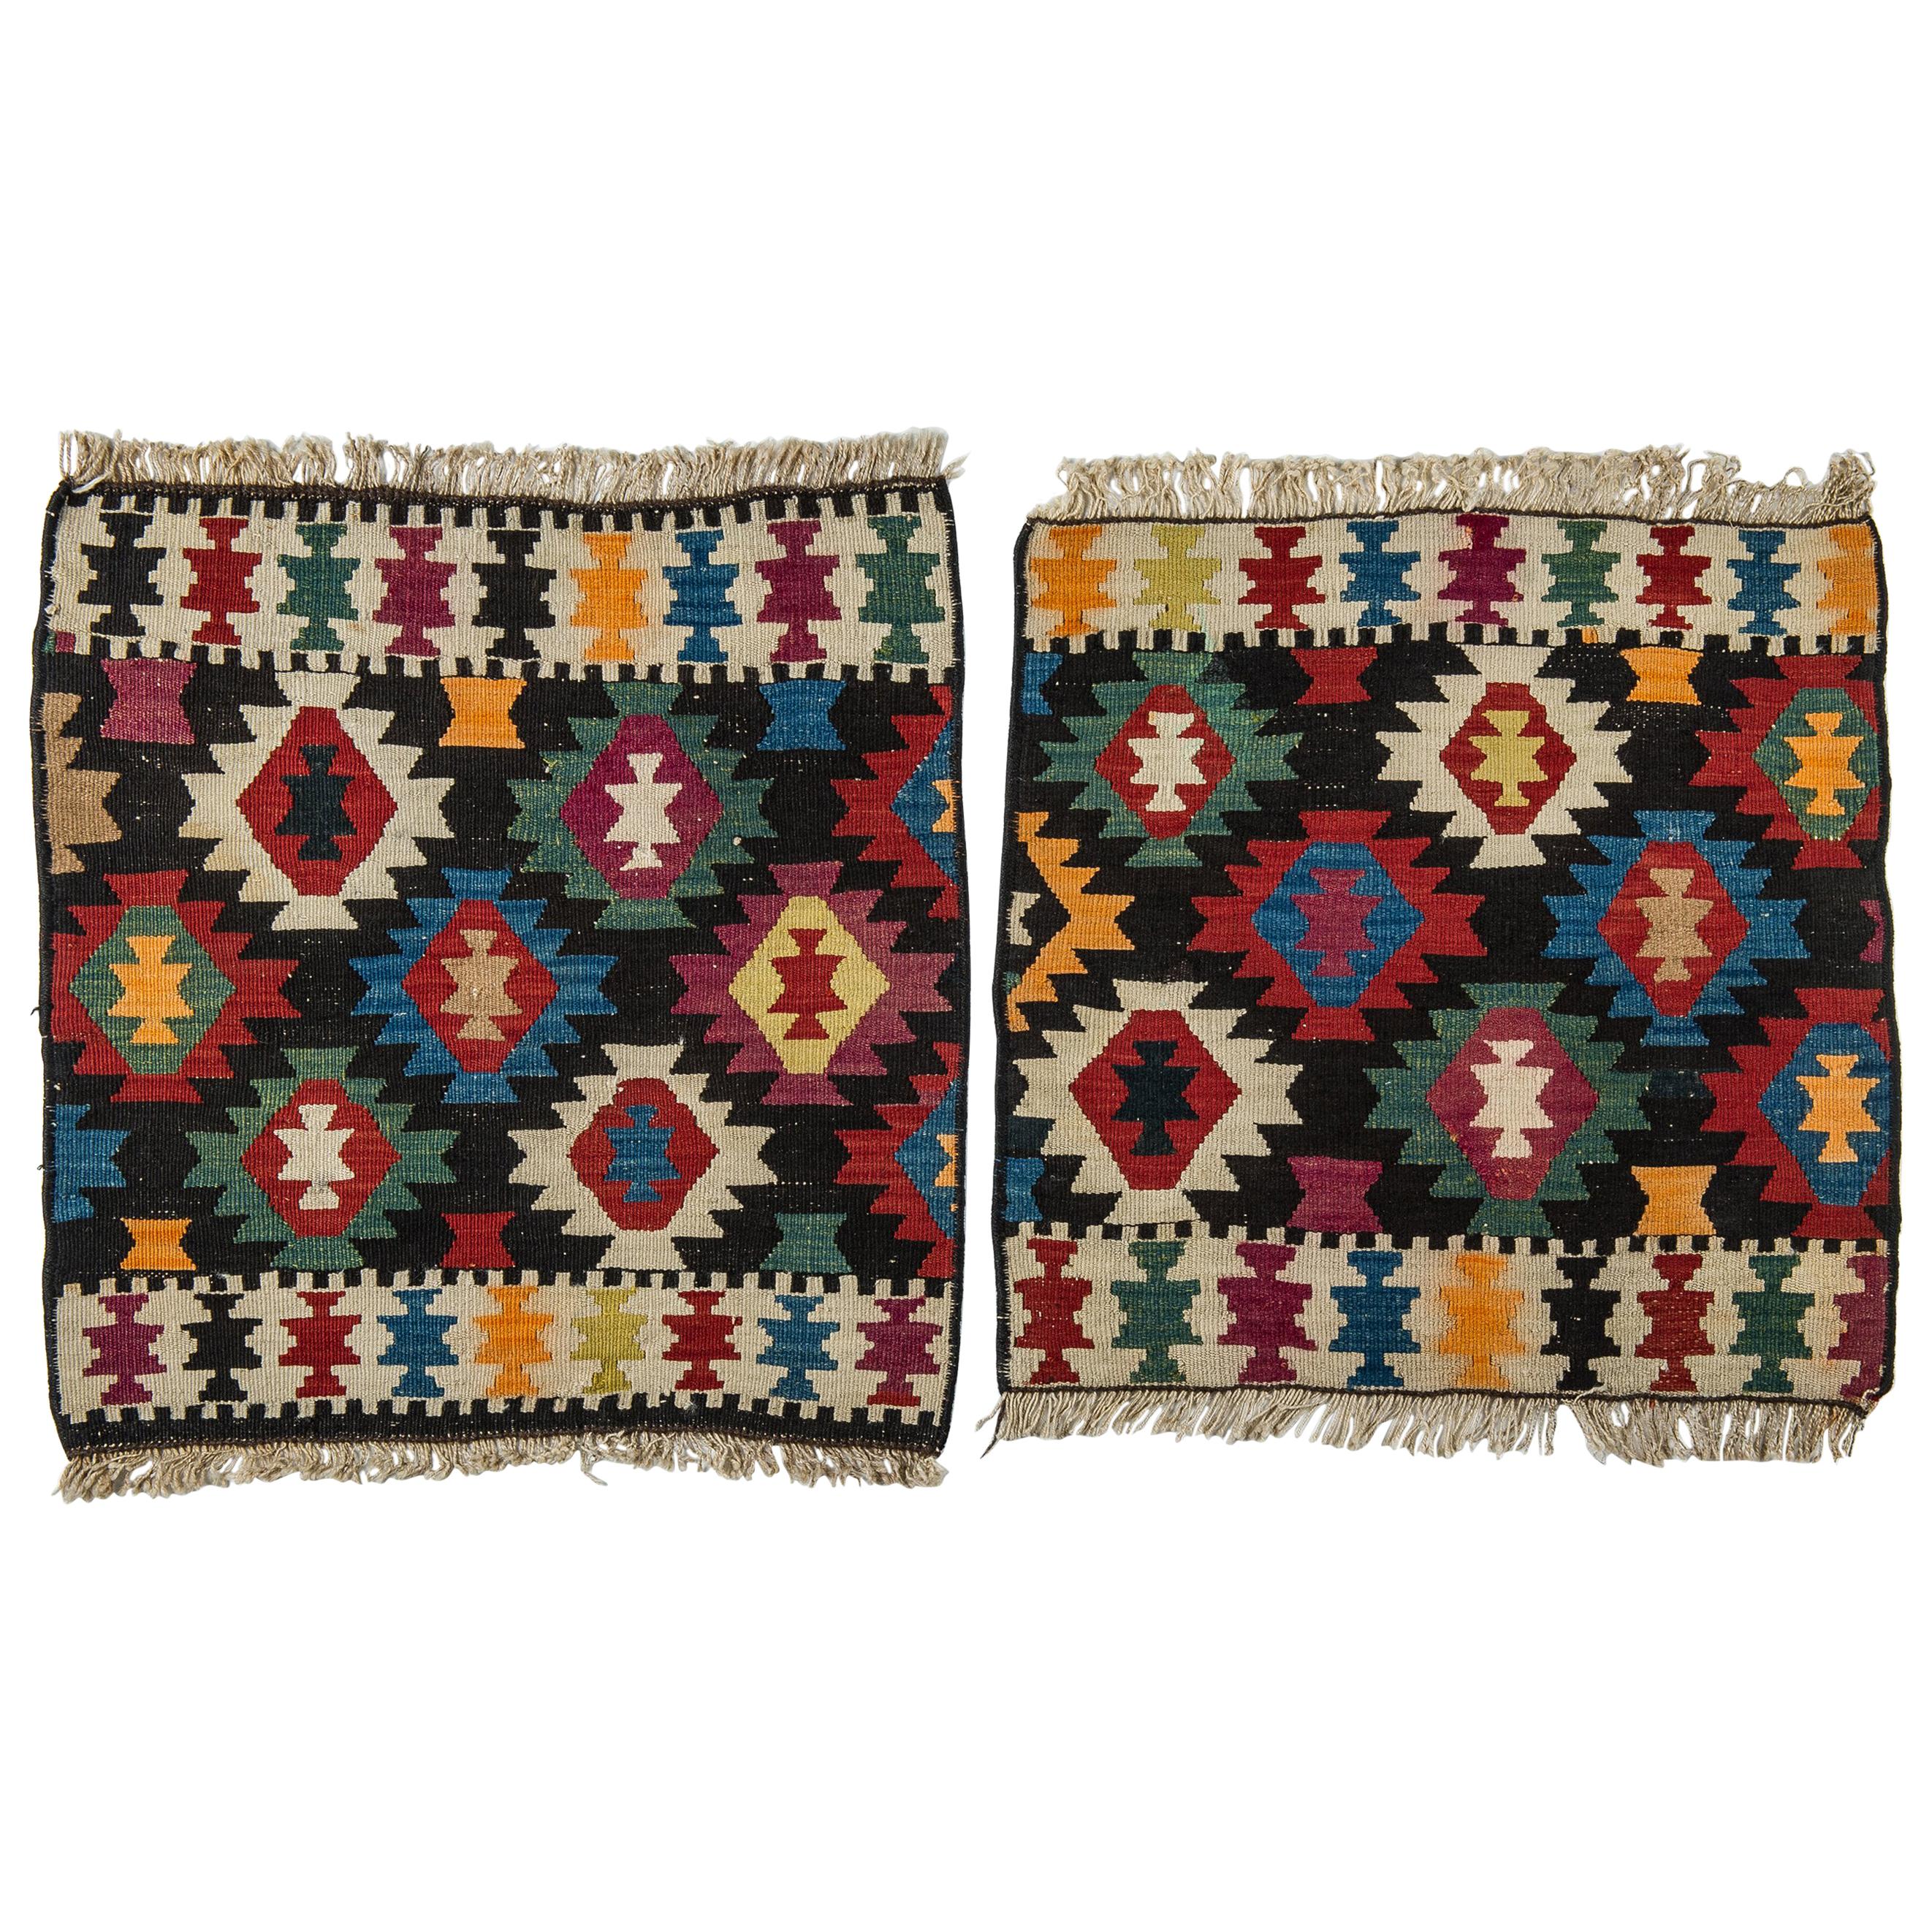  Rare Little Pair Kilims Azeri or Shahsavan for Stools or Special Pillows